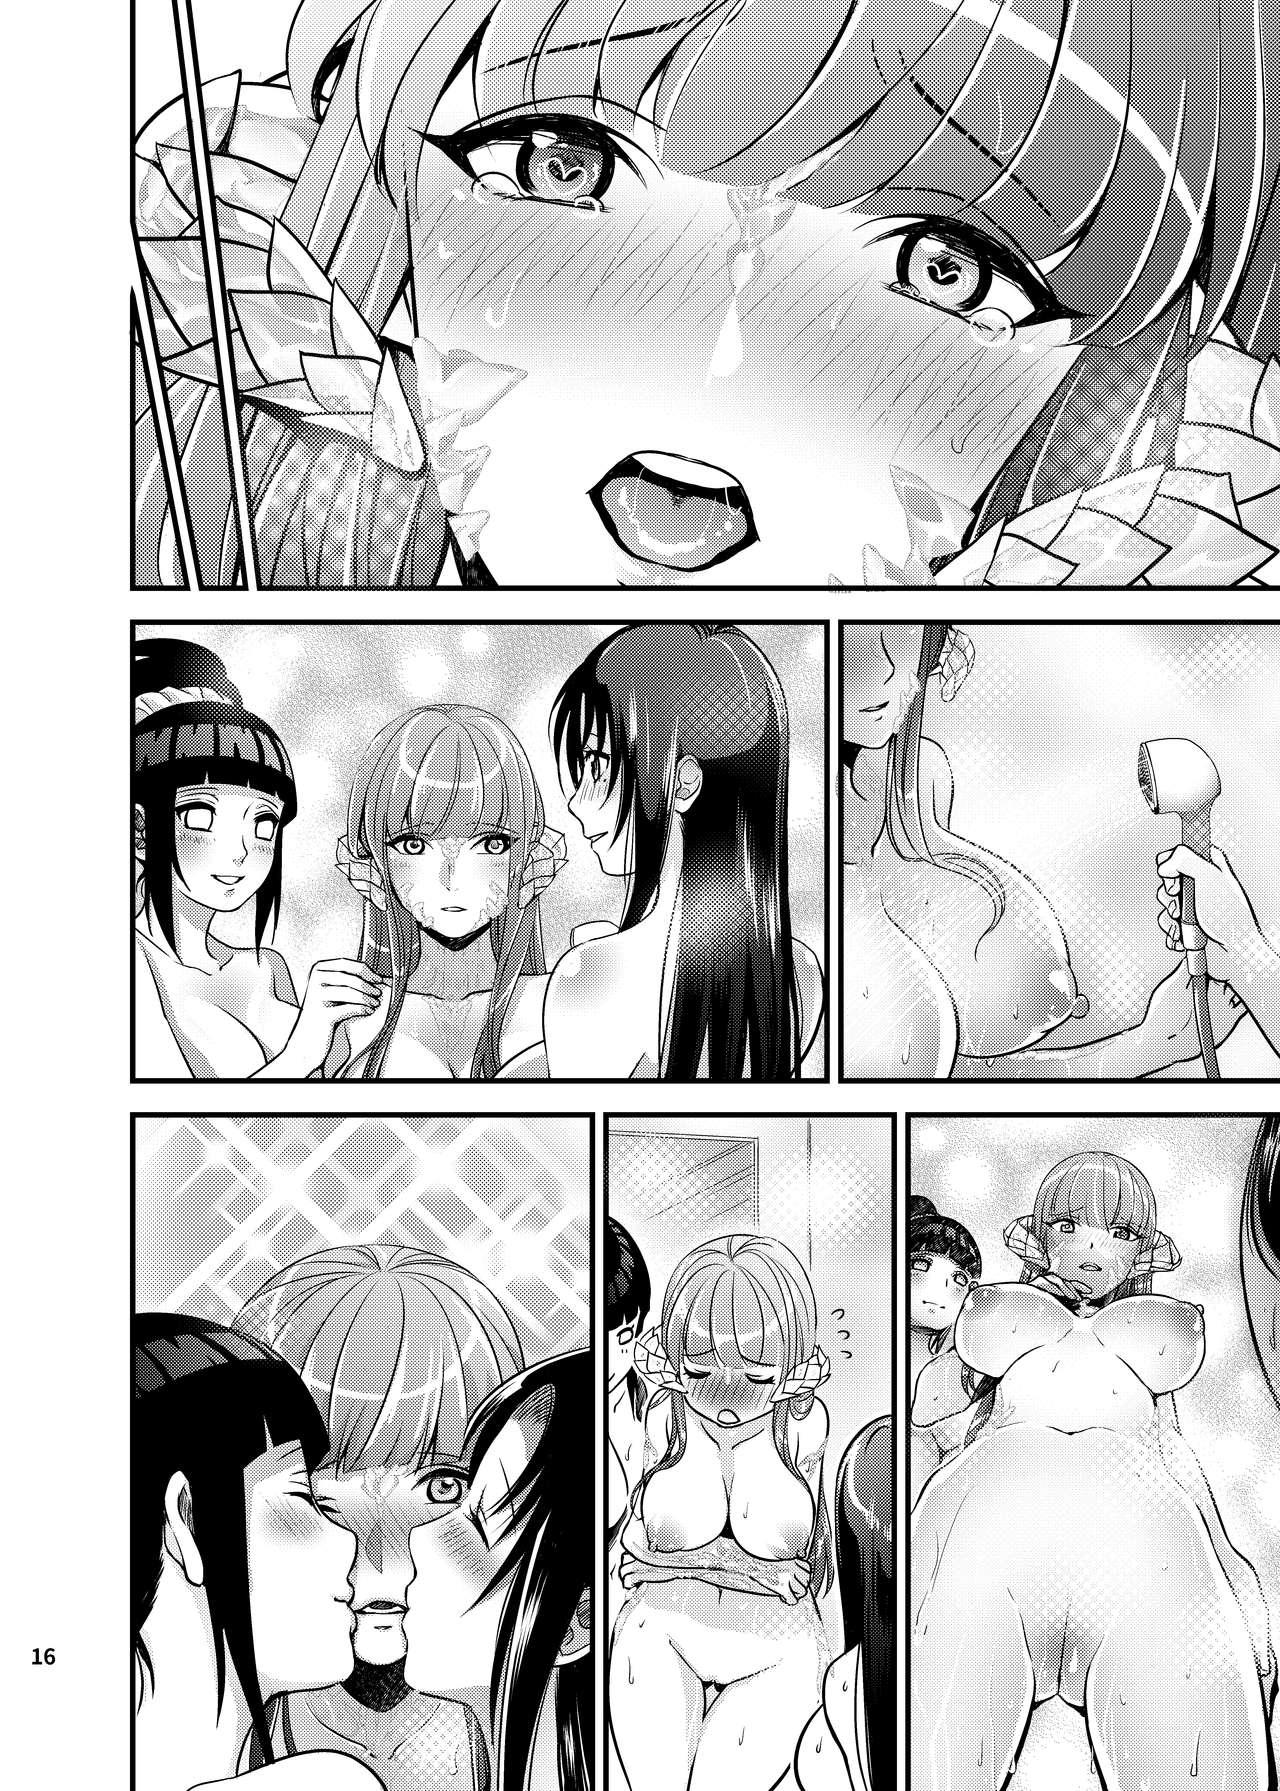 Condom A Night for girls across the worlds - Naruto Final fantasy xiv Final fantasy Nana to kaoru Brunettes - Page 15